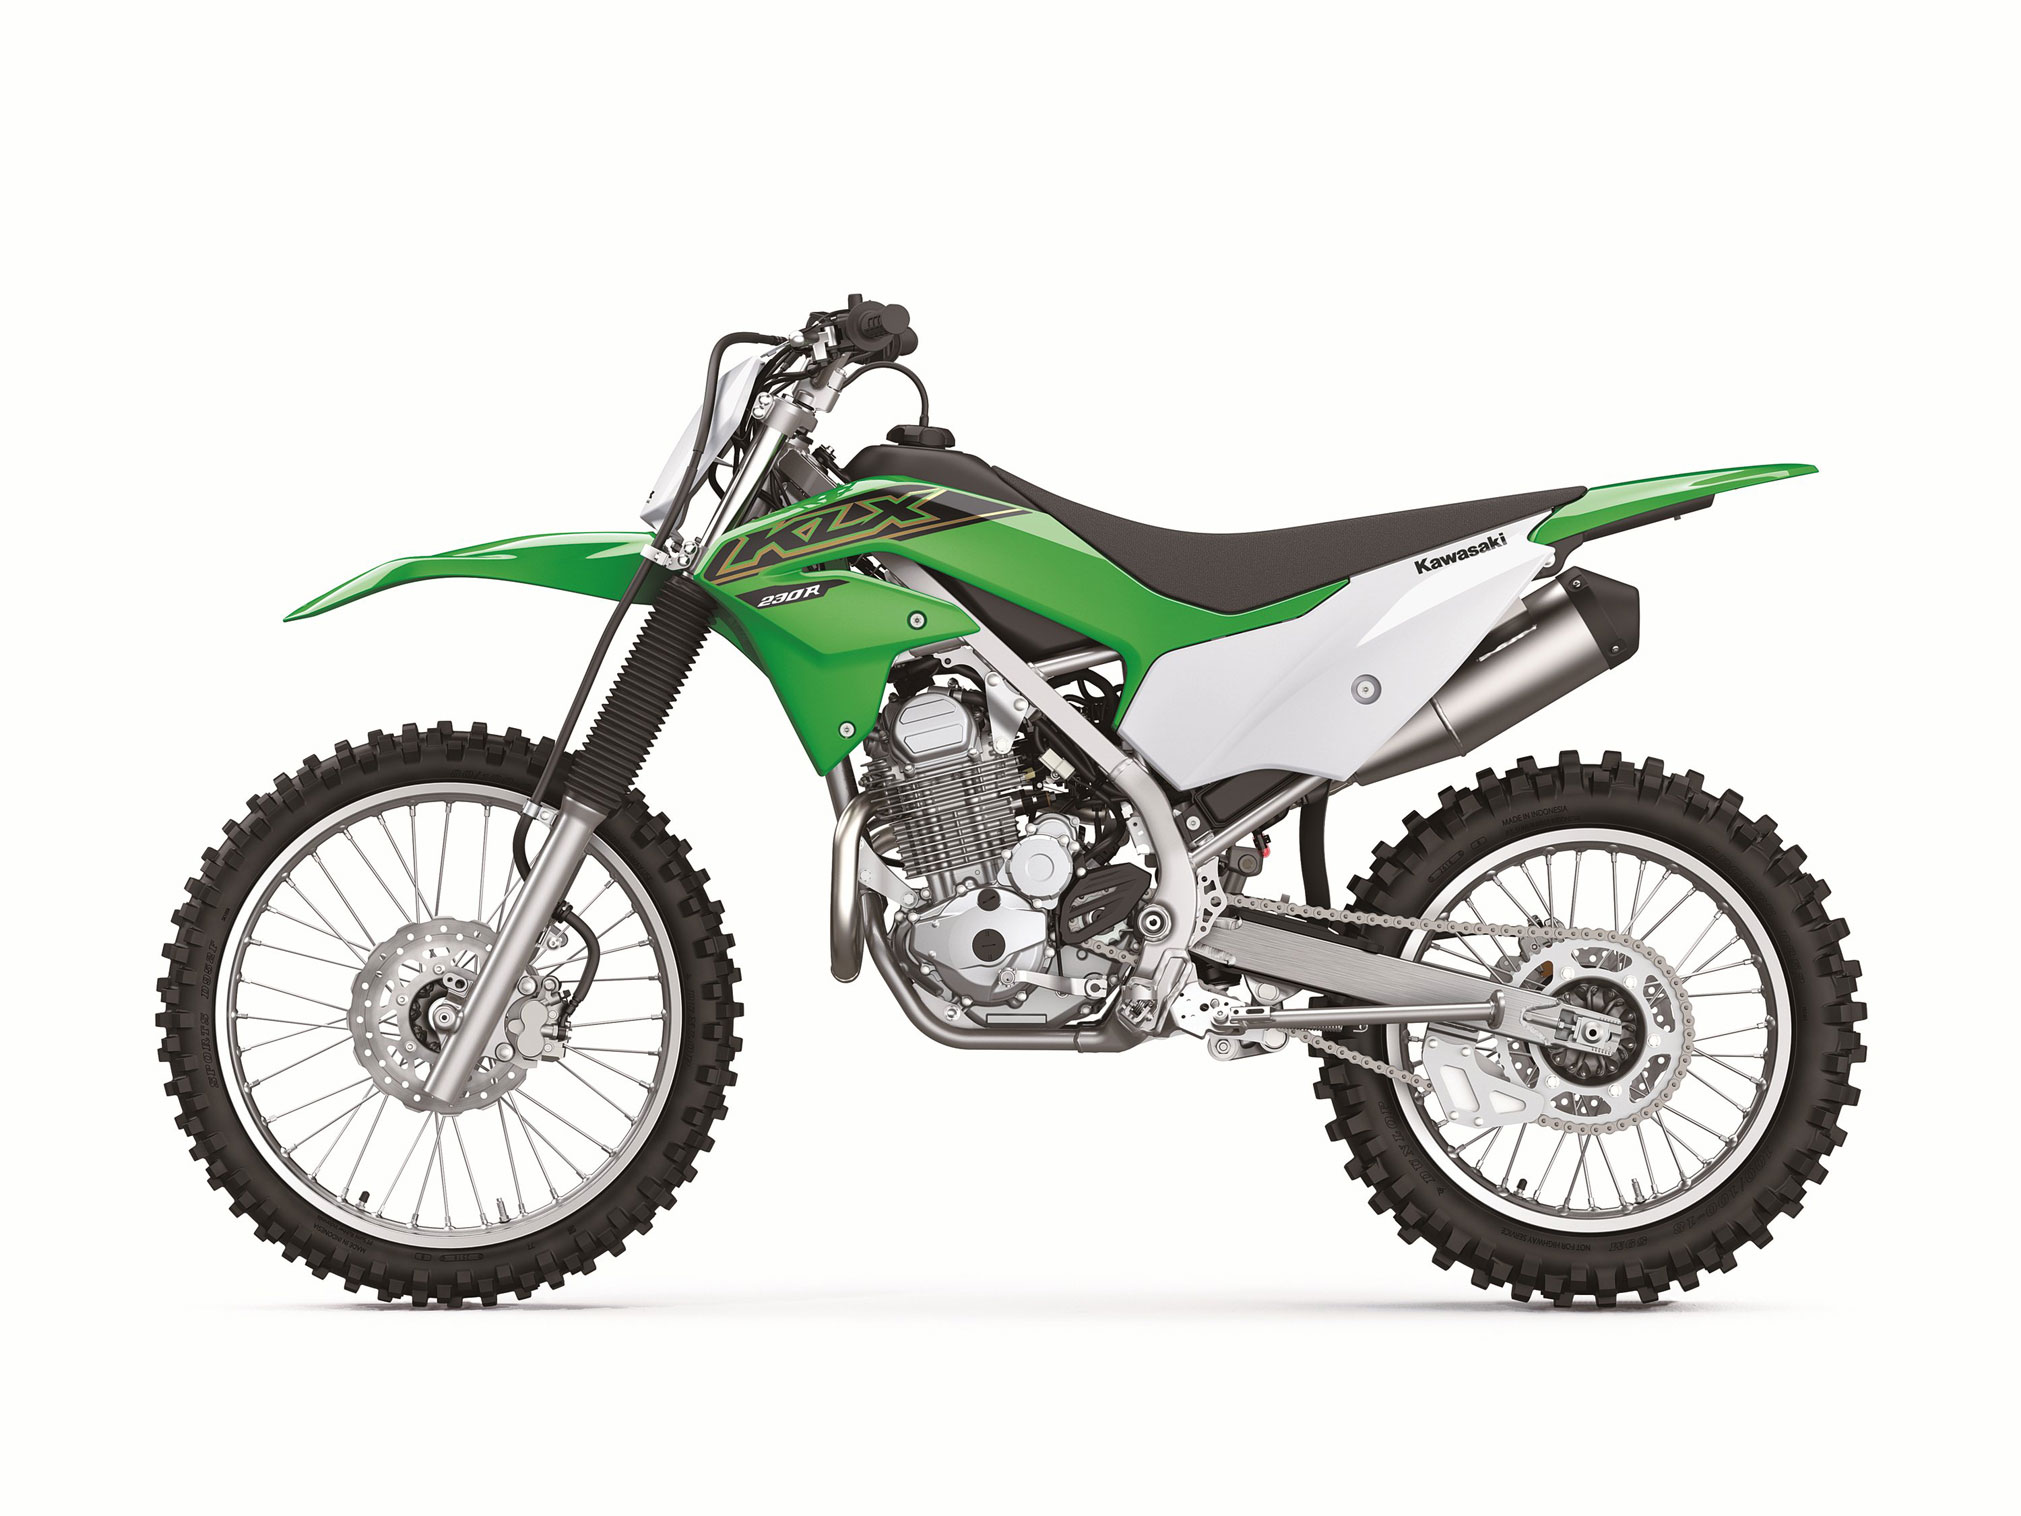 2022 Kawasaki KLX230R Guide  Total Motorcycle